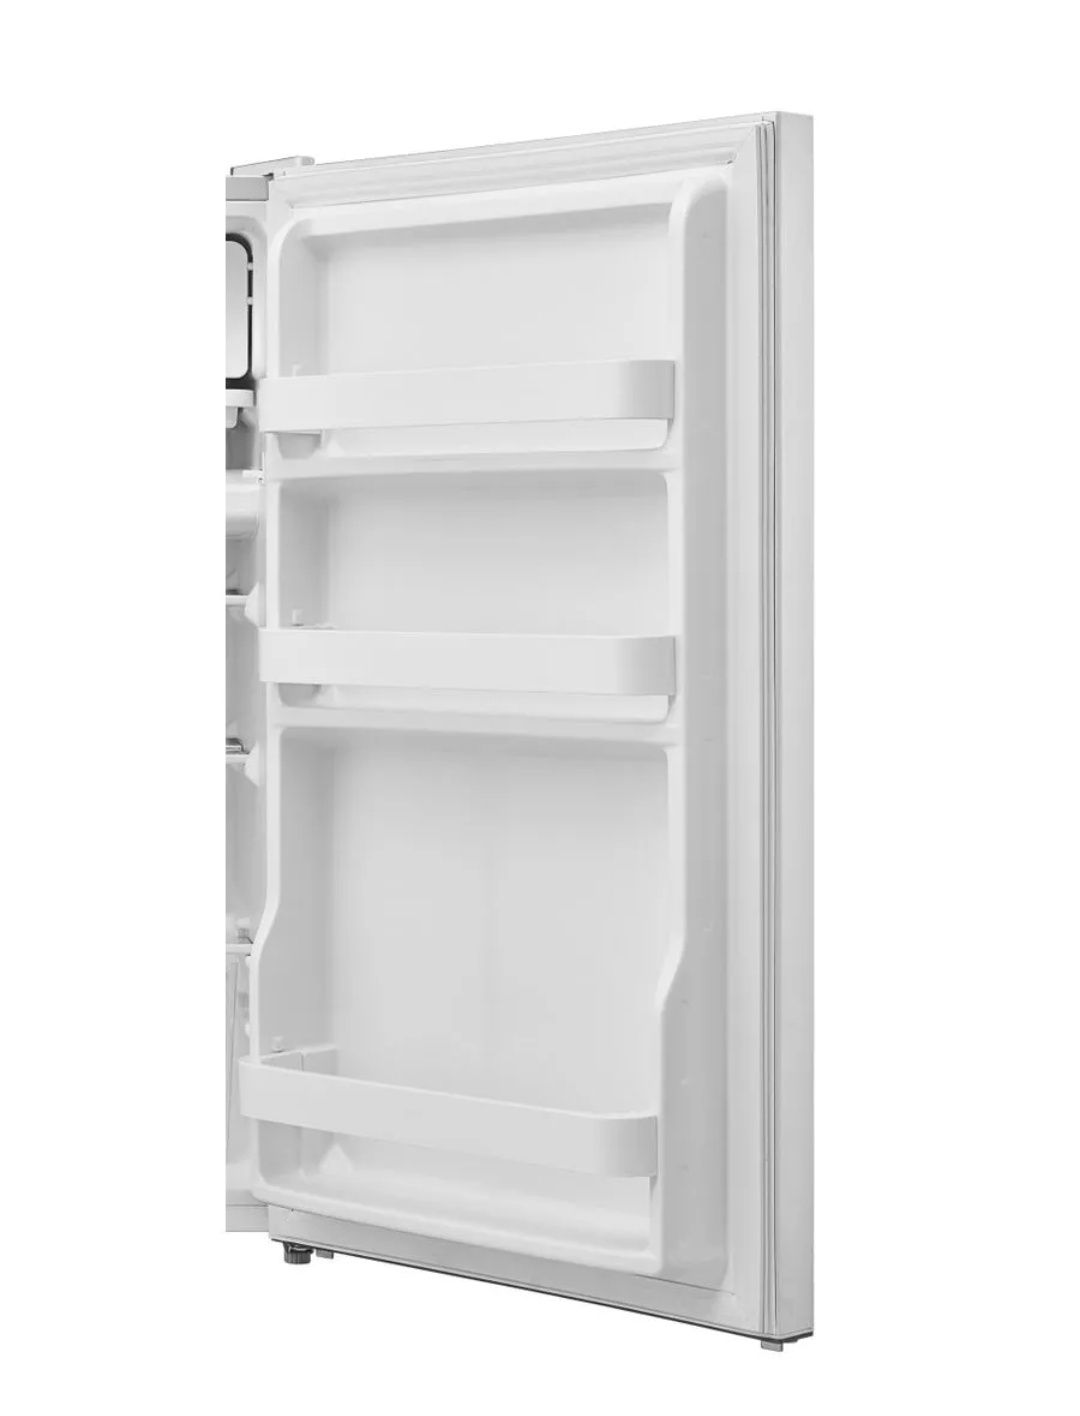 Мини-холодильник Б-95 БИРЮСА